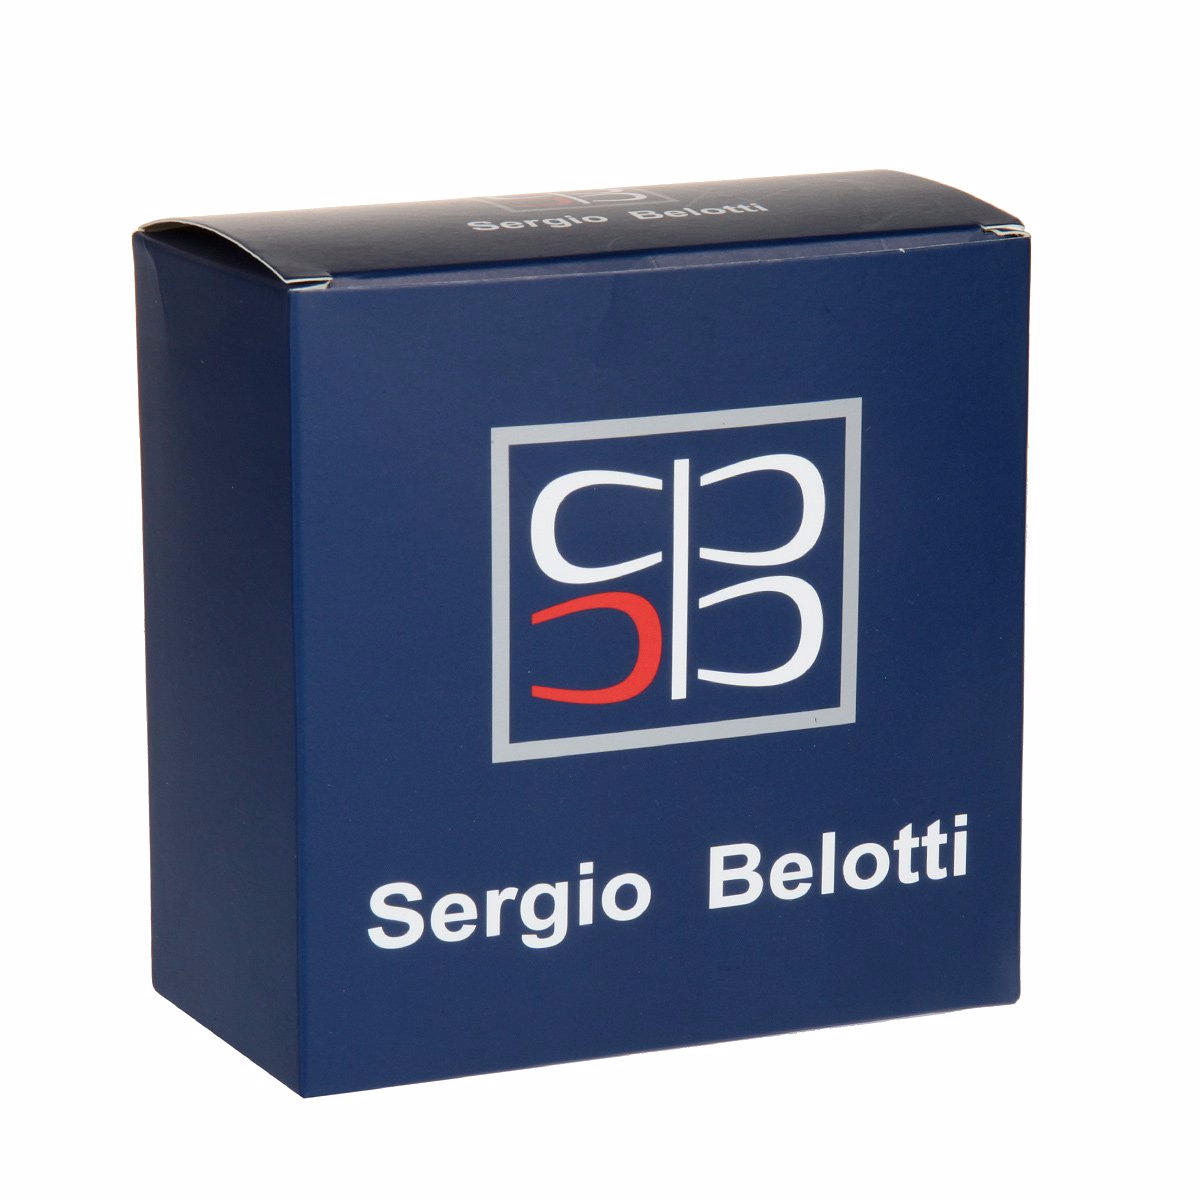 Ремень
Sergio Belotti
1018/40 Navy Ремни и пояса